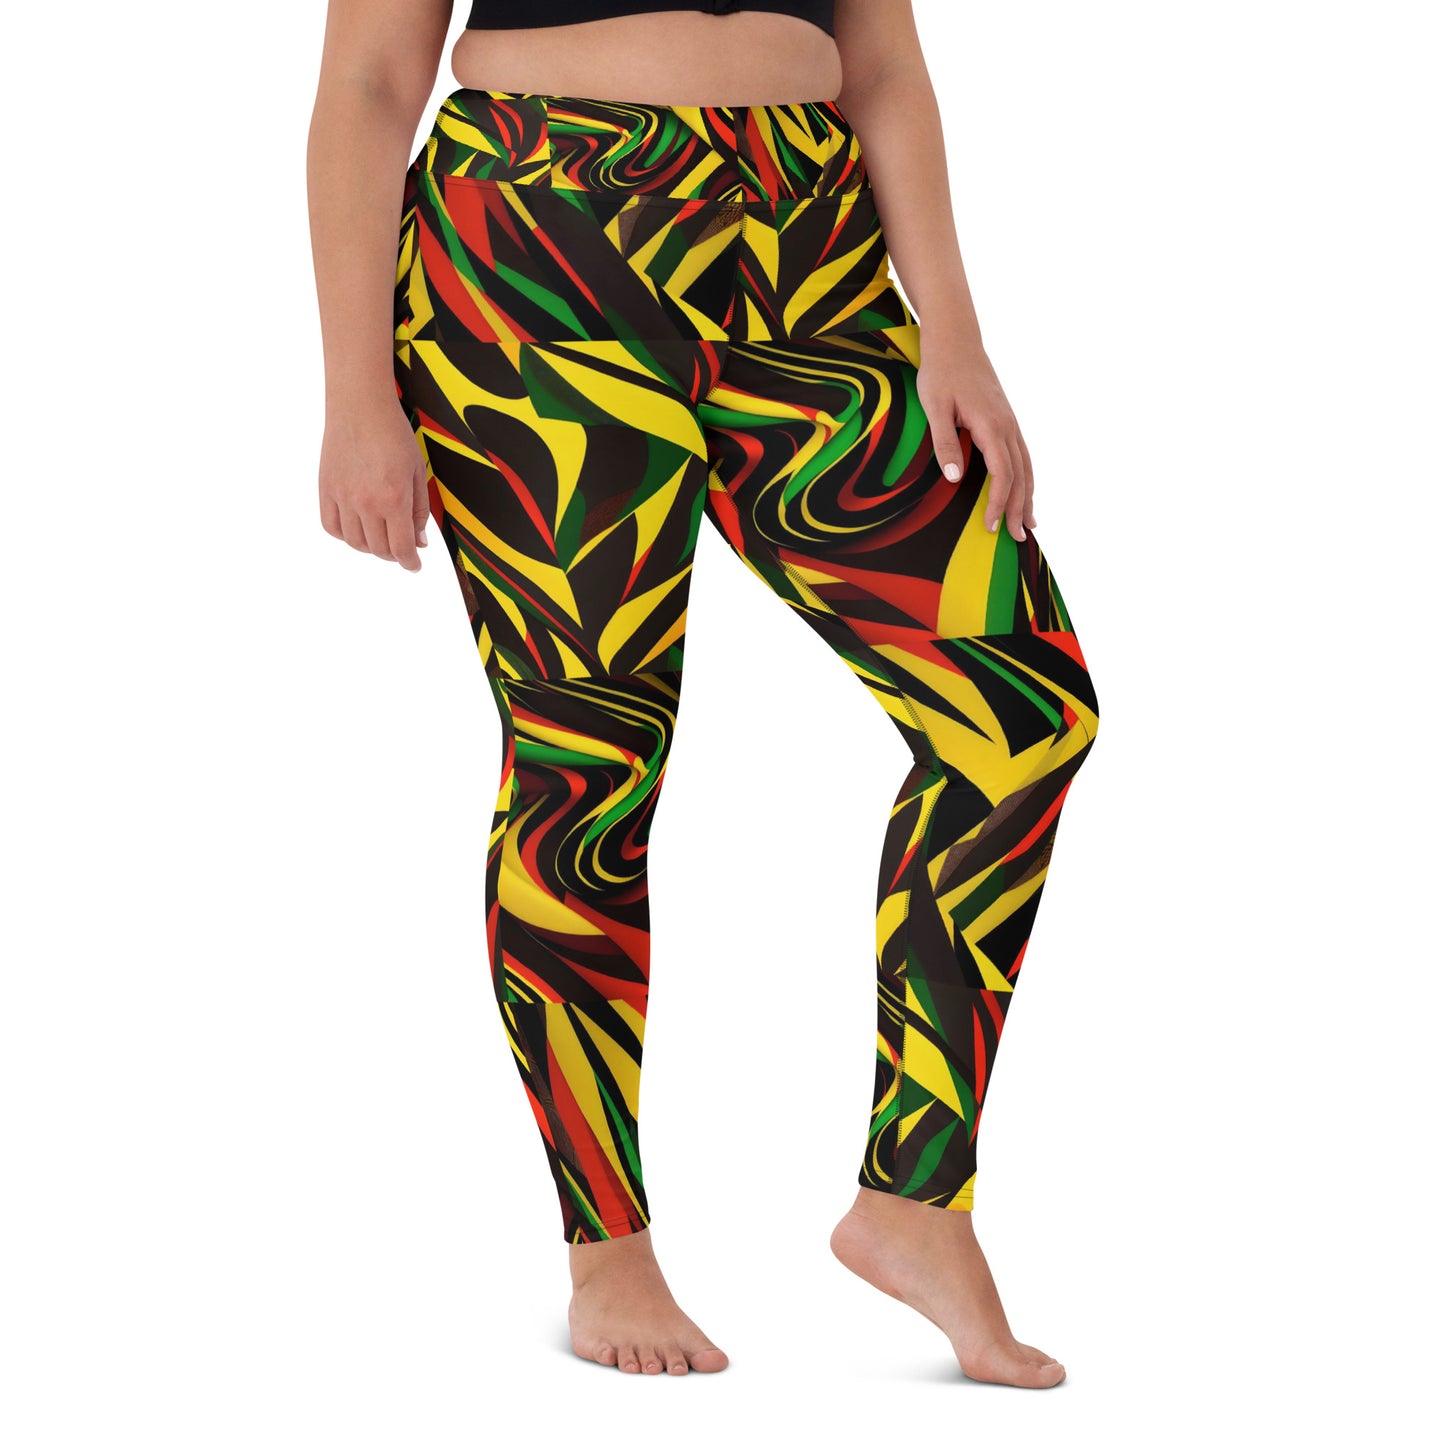 Gorky #DATASS Yoga Pants - Jungle Fever